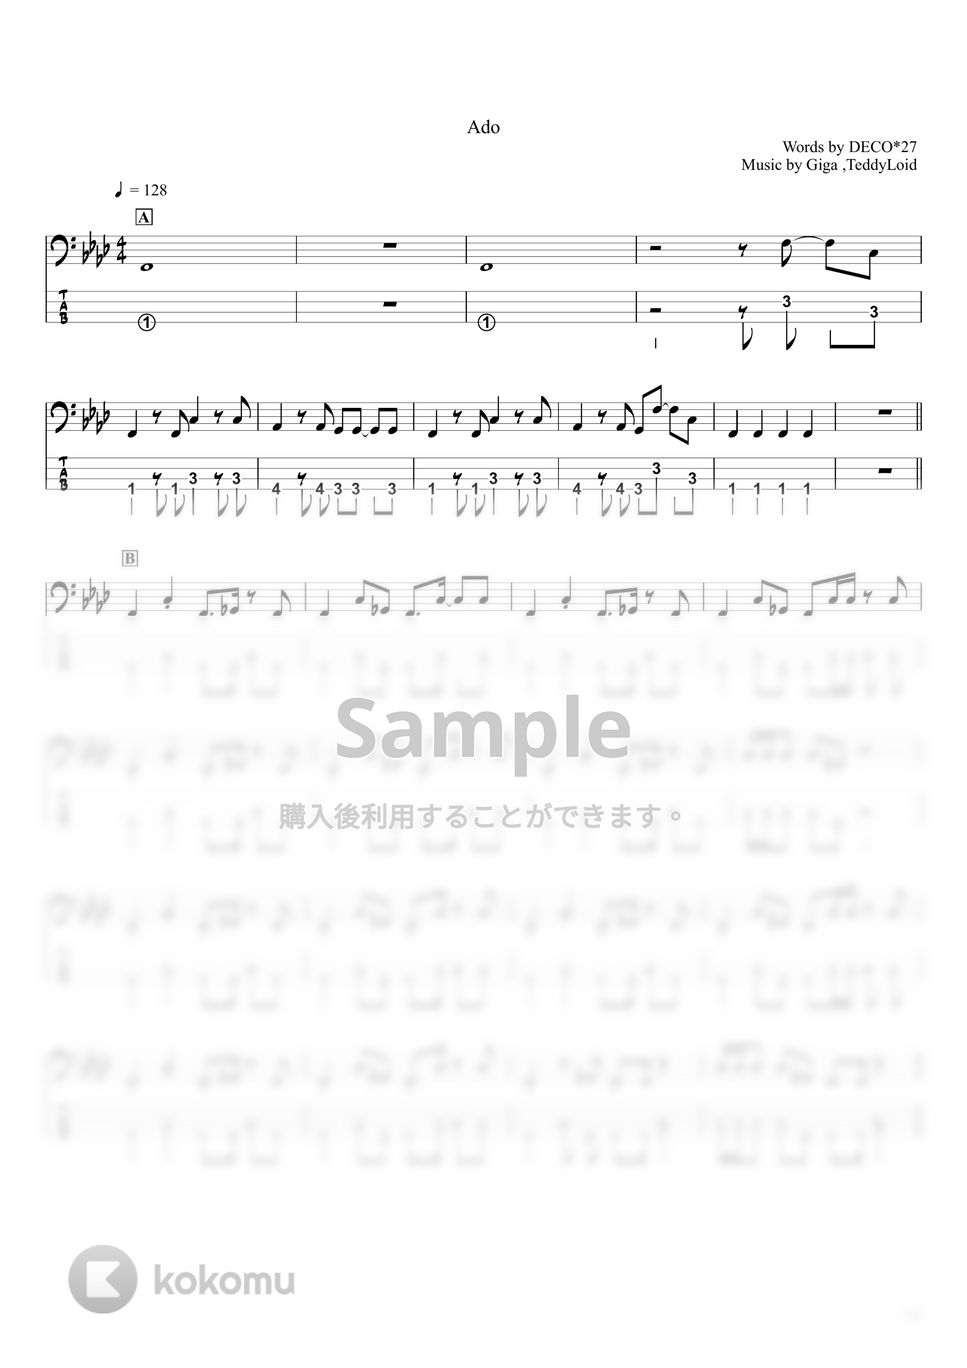 Ado - 踊 (ベースTAB譜☆4弦ベース対応) by swbass